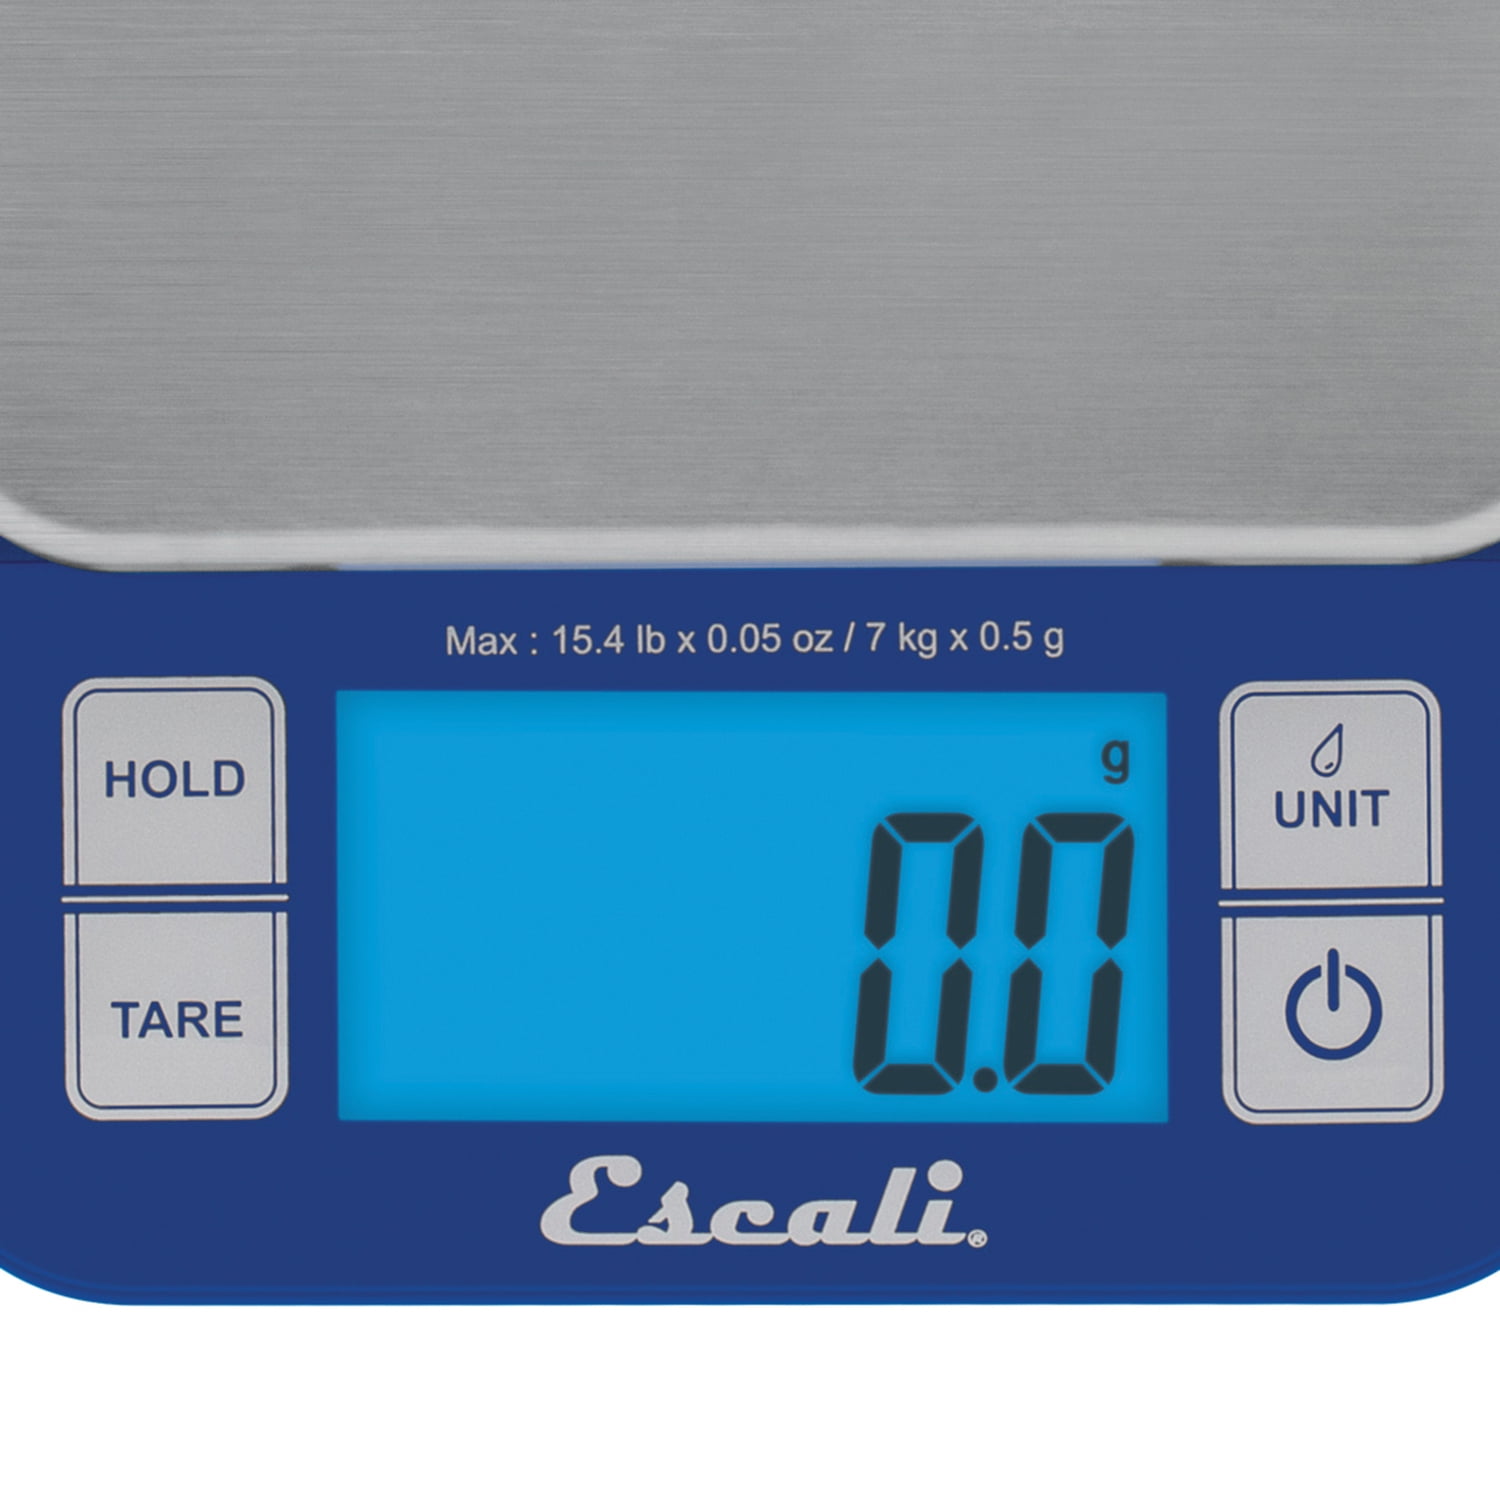 Escali Telero Digital Kitchen Scale Blue : Target